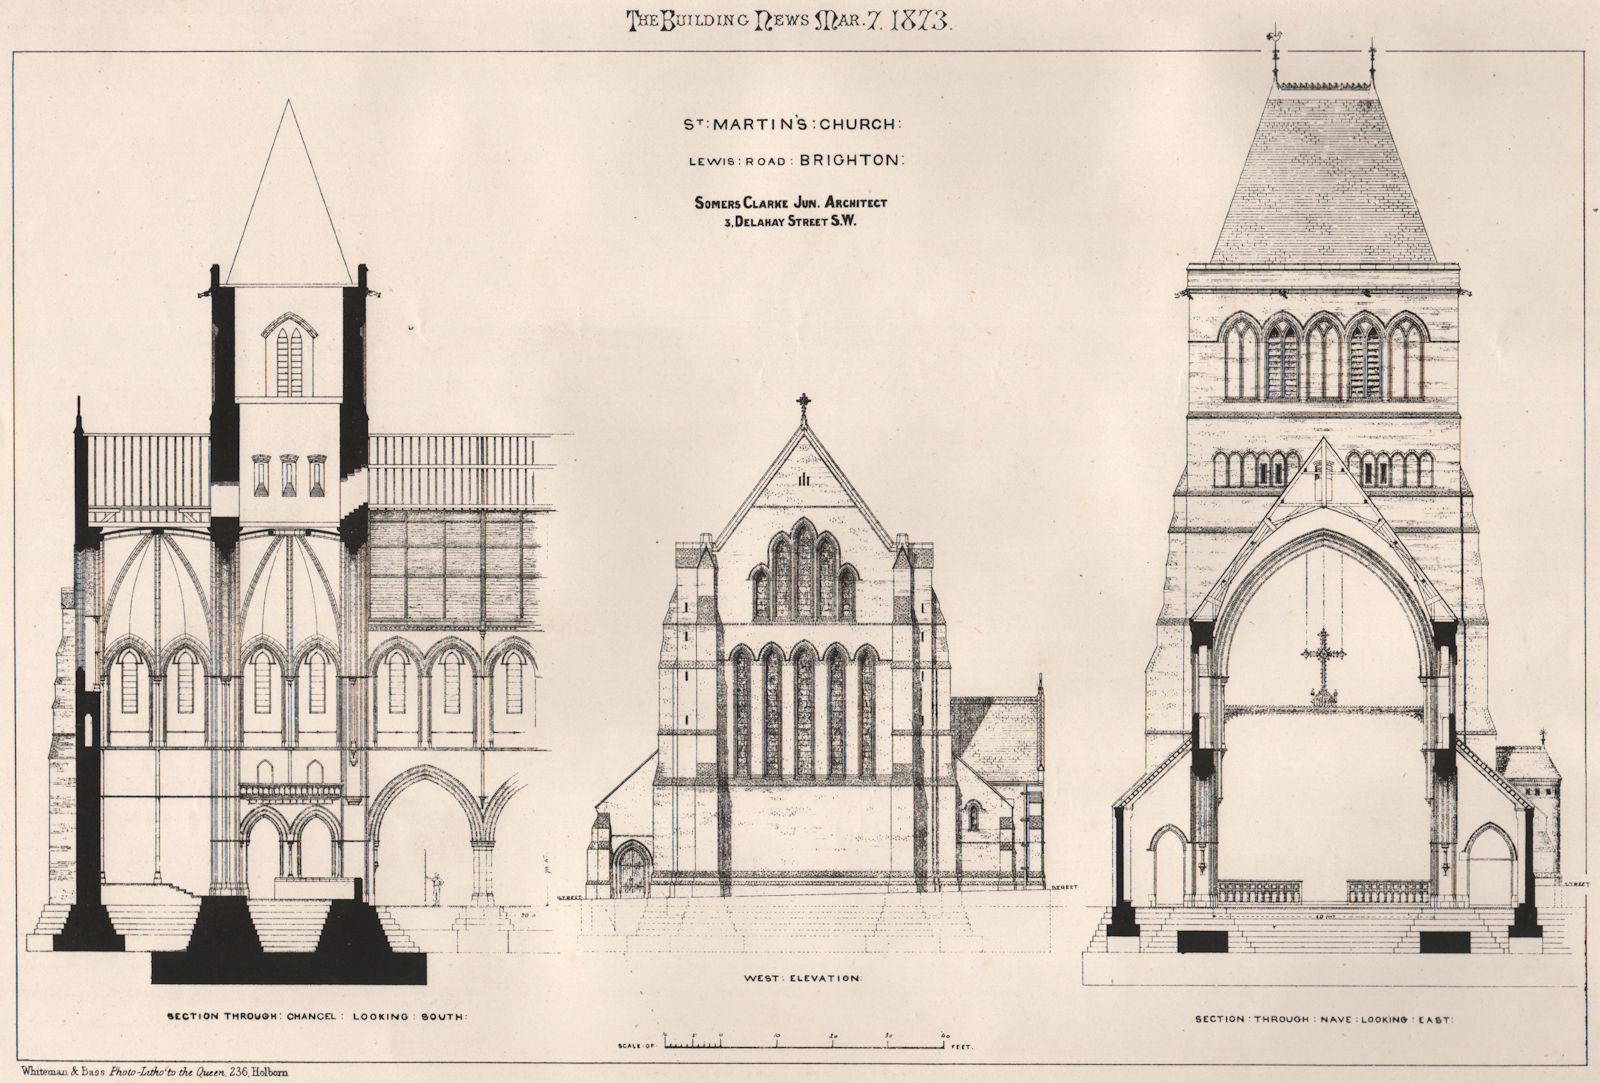 St. Martin's Church, Lewis Road, Brighton, Sussex; Somers Clarke Jr Archt 1873